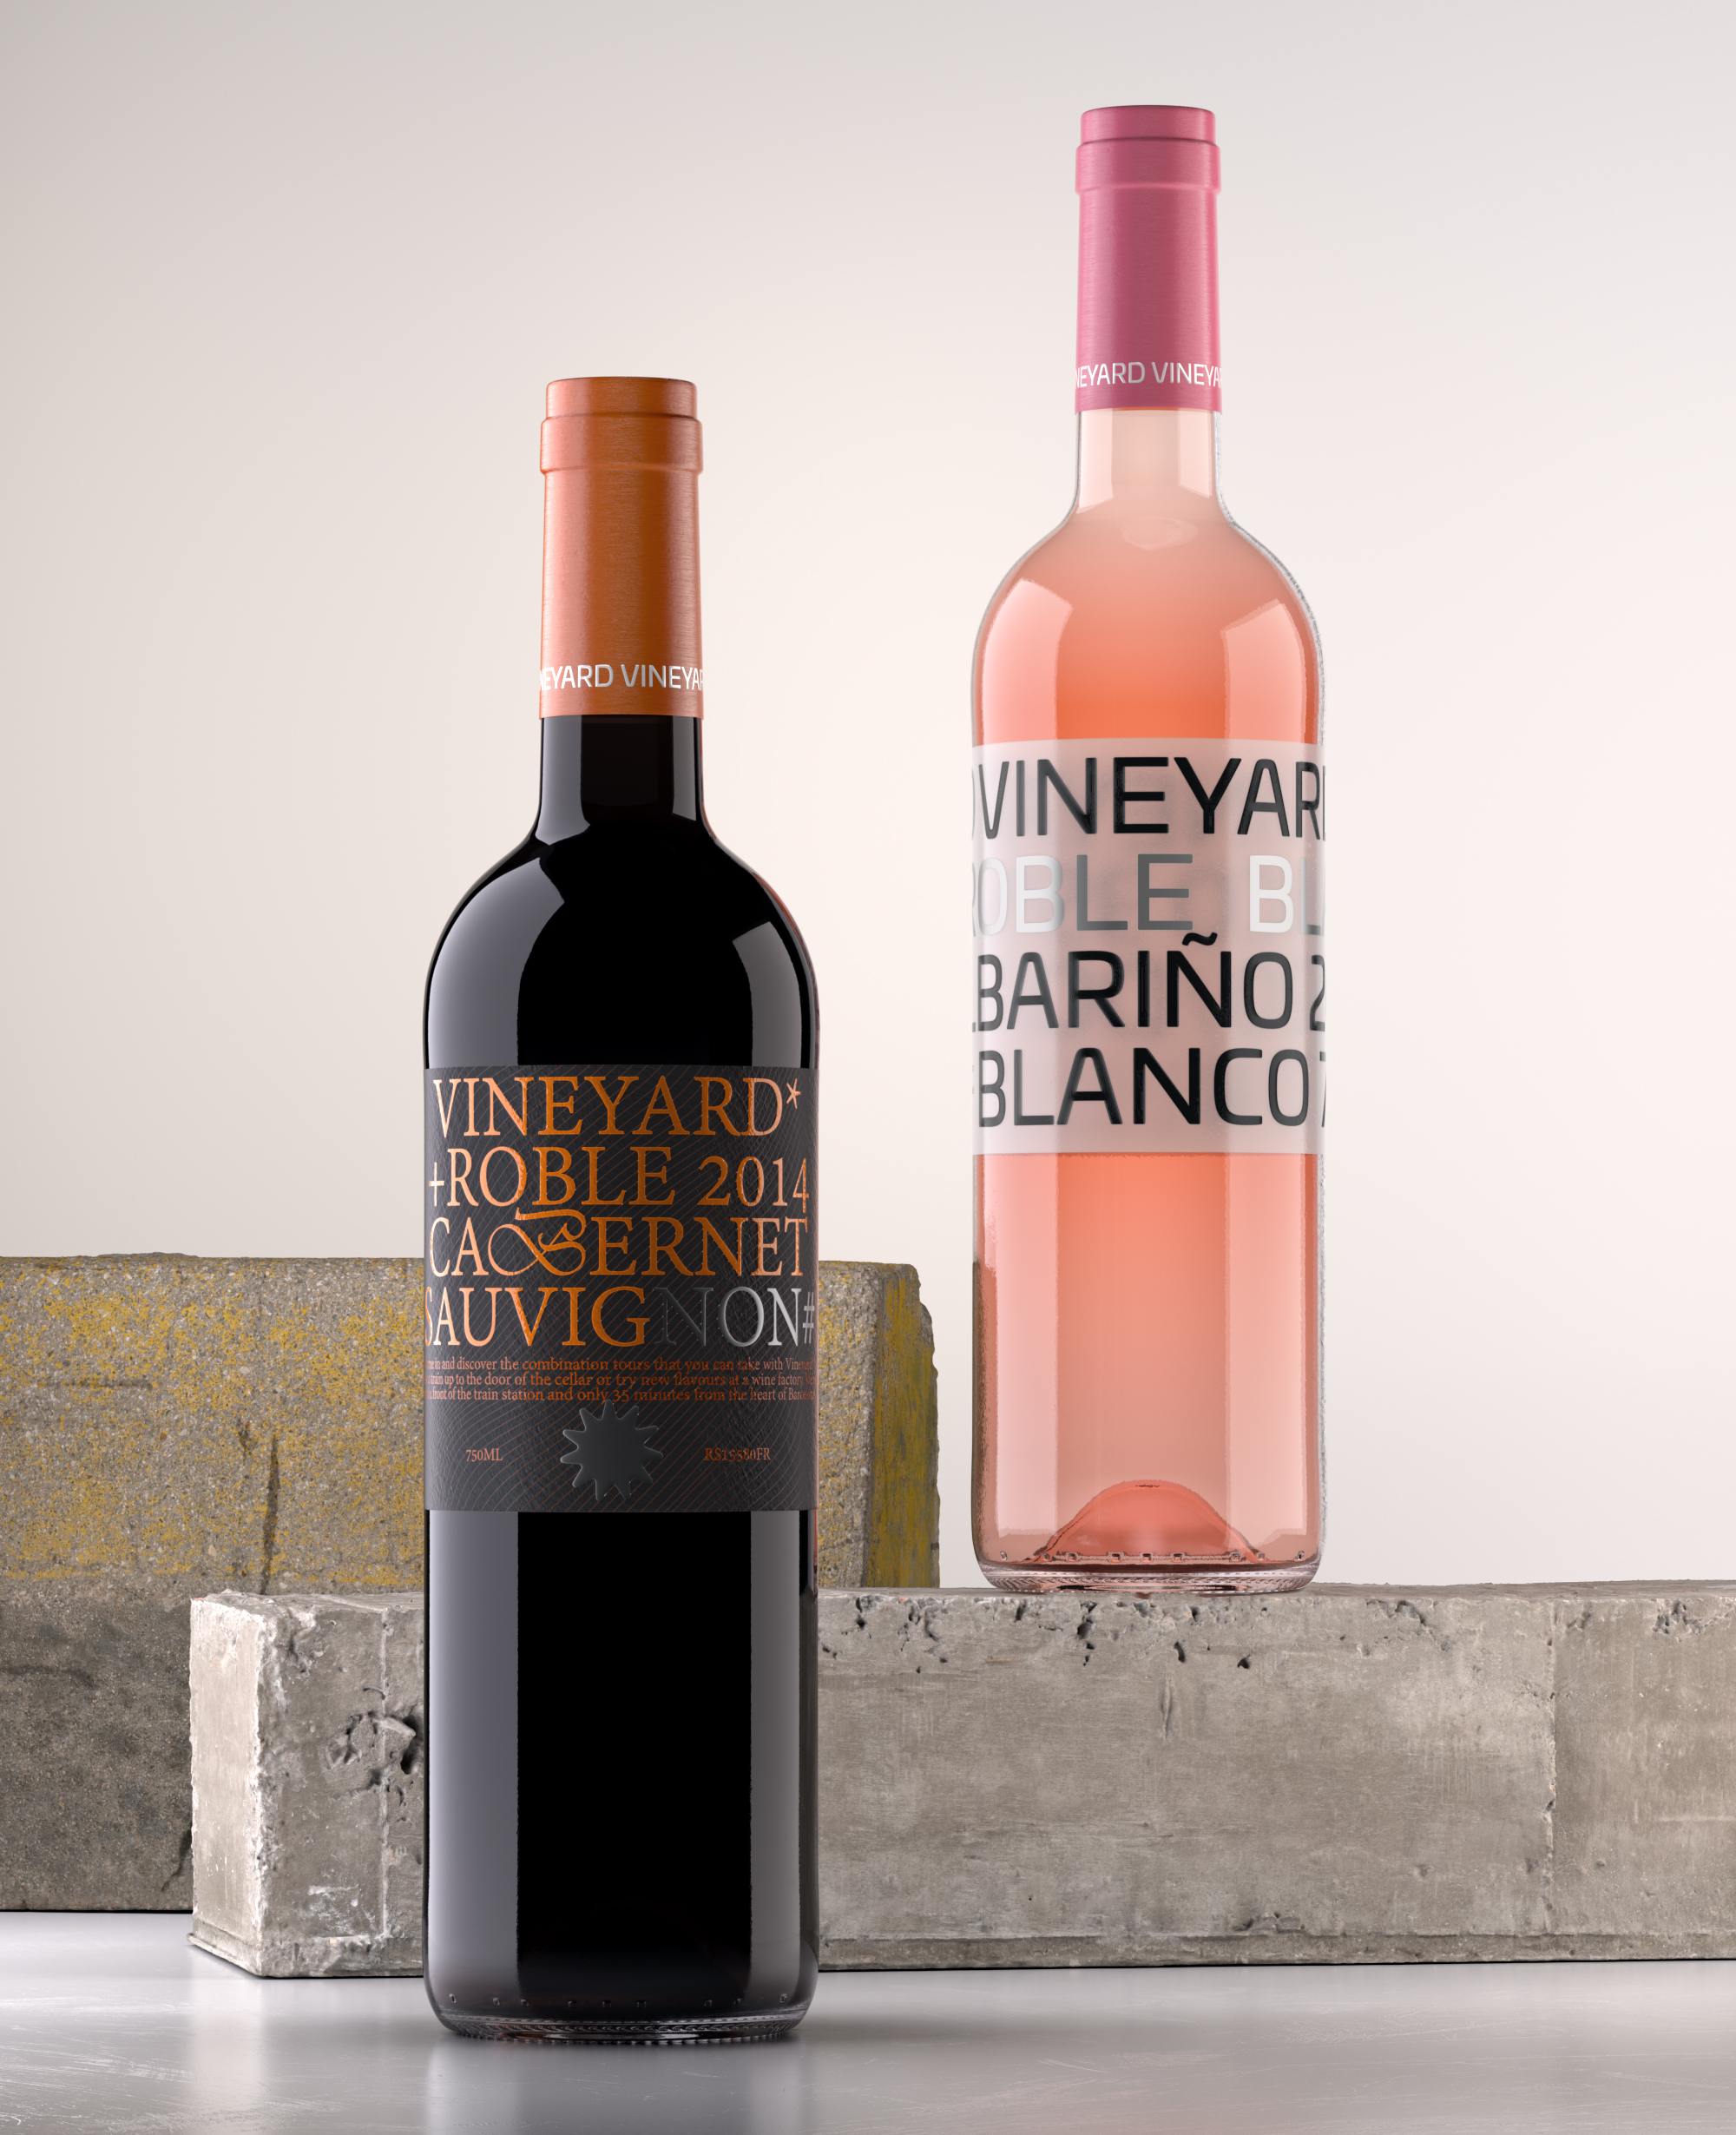 Photorealistic render of wine bottles - Bottle label and display design